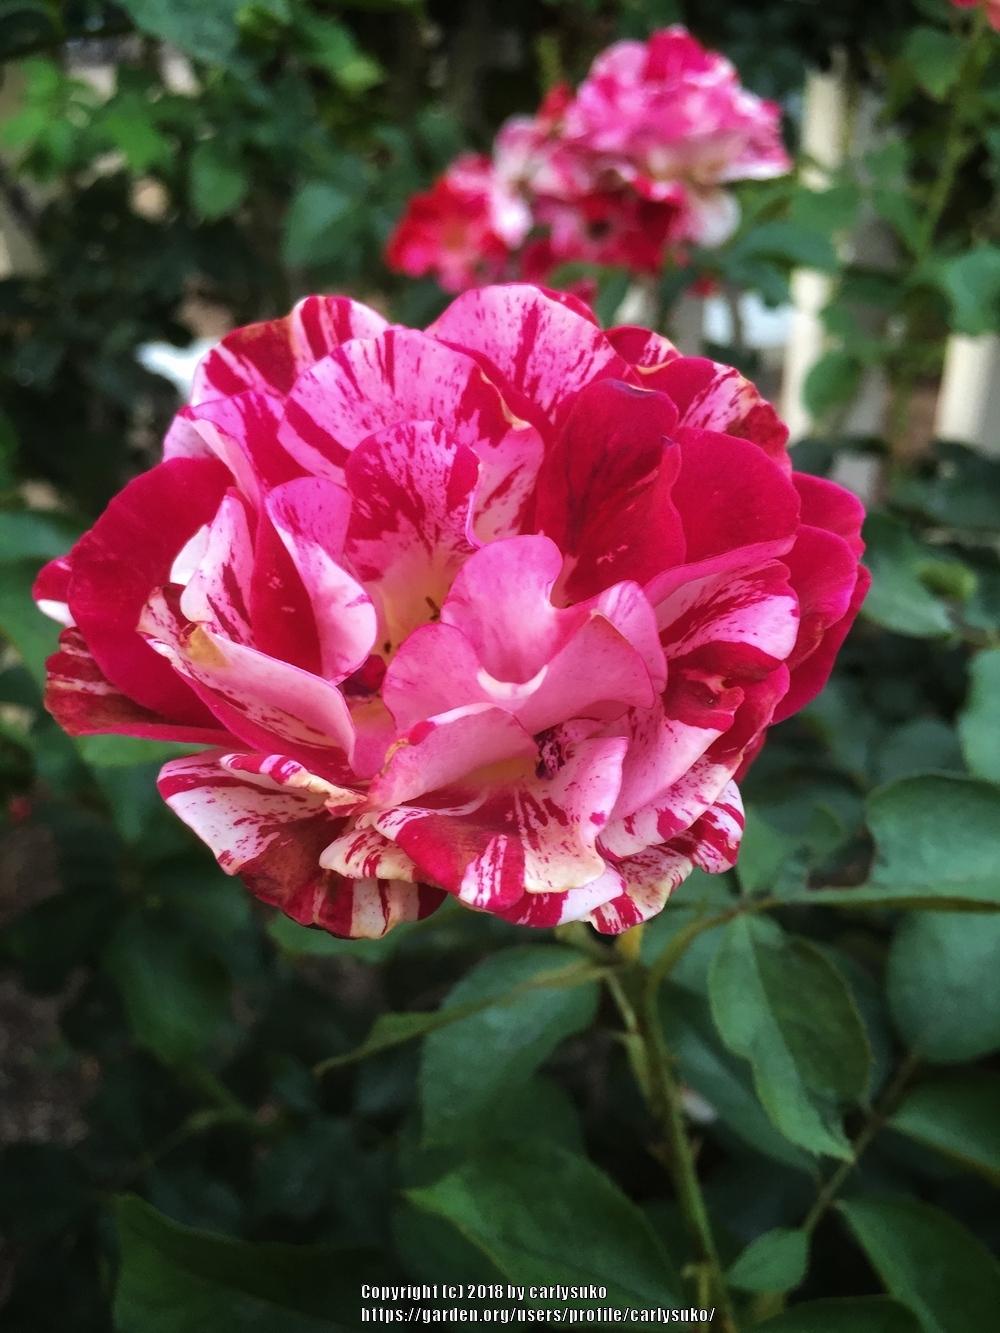 Photo of Rose (Rosa 'George Burns') uploaded by carlysuko